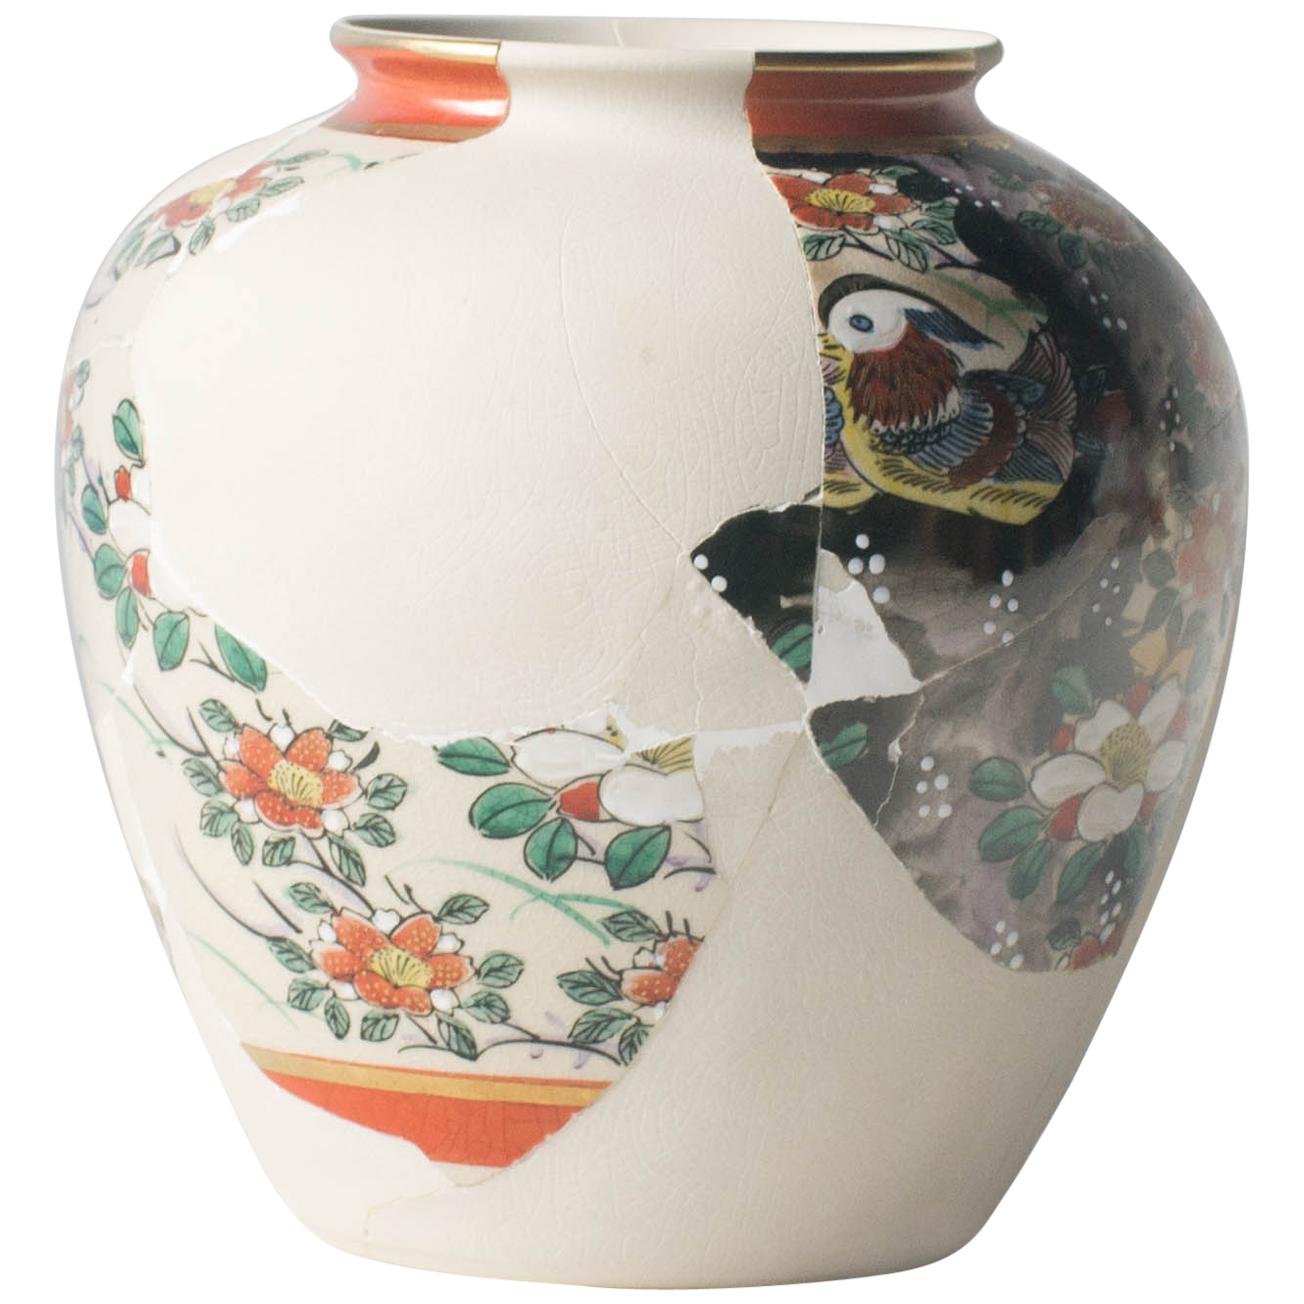 Reconstructed Ceramics #7 Contemporary Zen Japonism Style